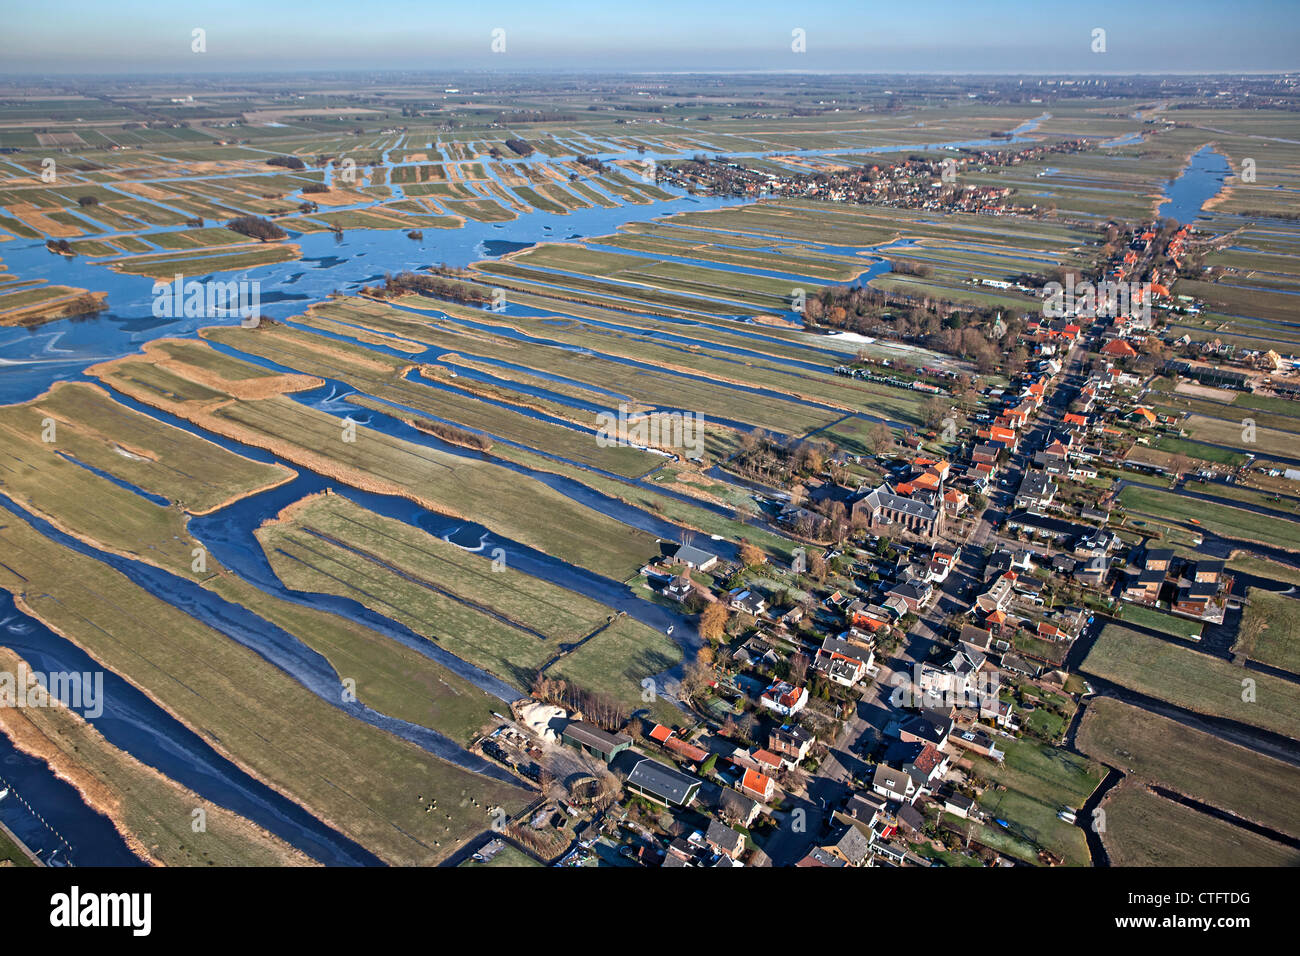 The Netherlands, Jisp, Aerial of village and polder landscape. Stock Photo